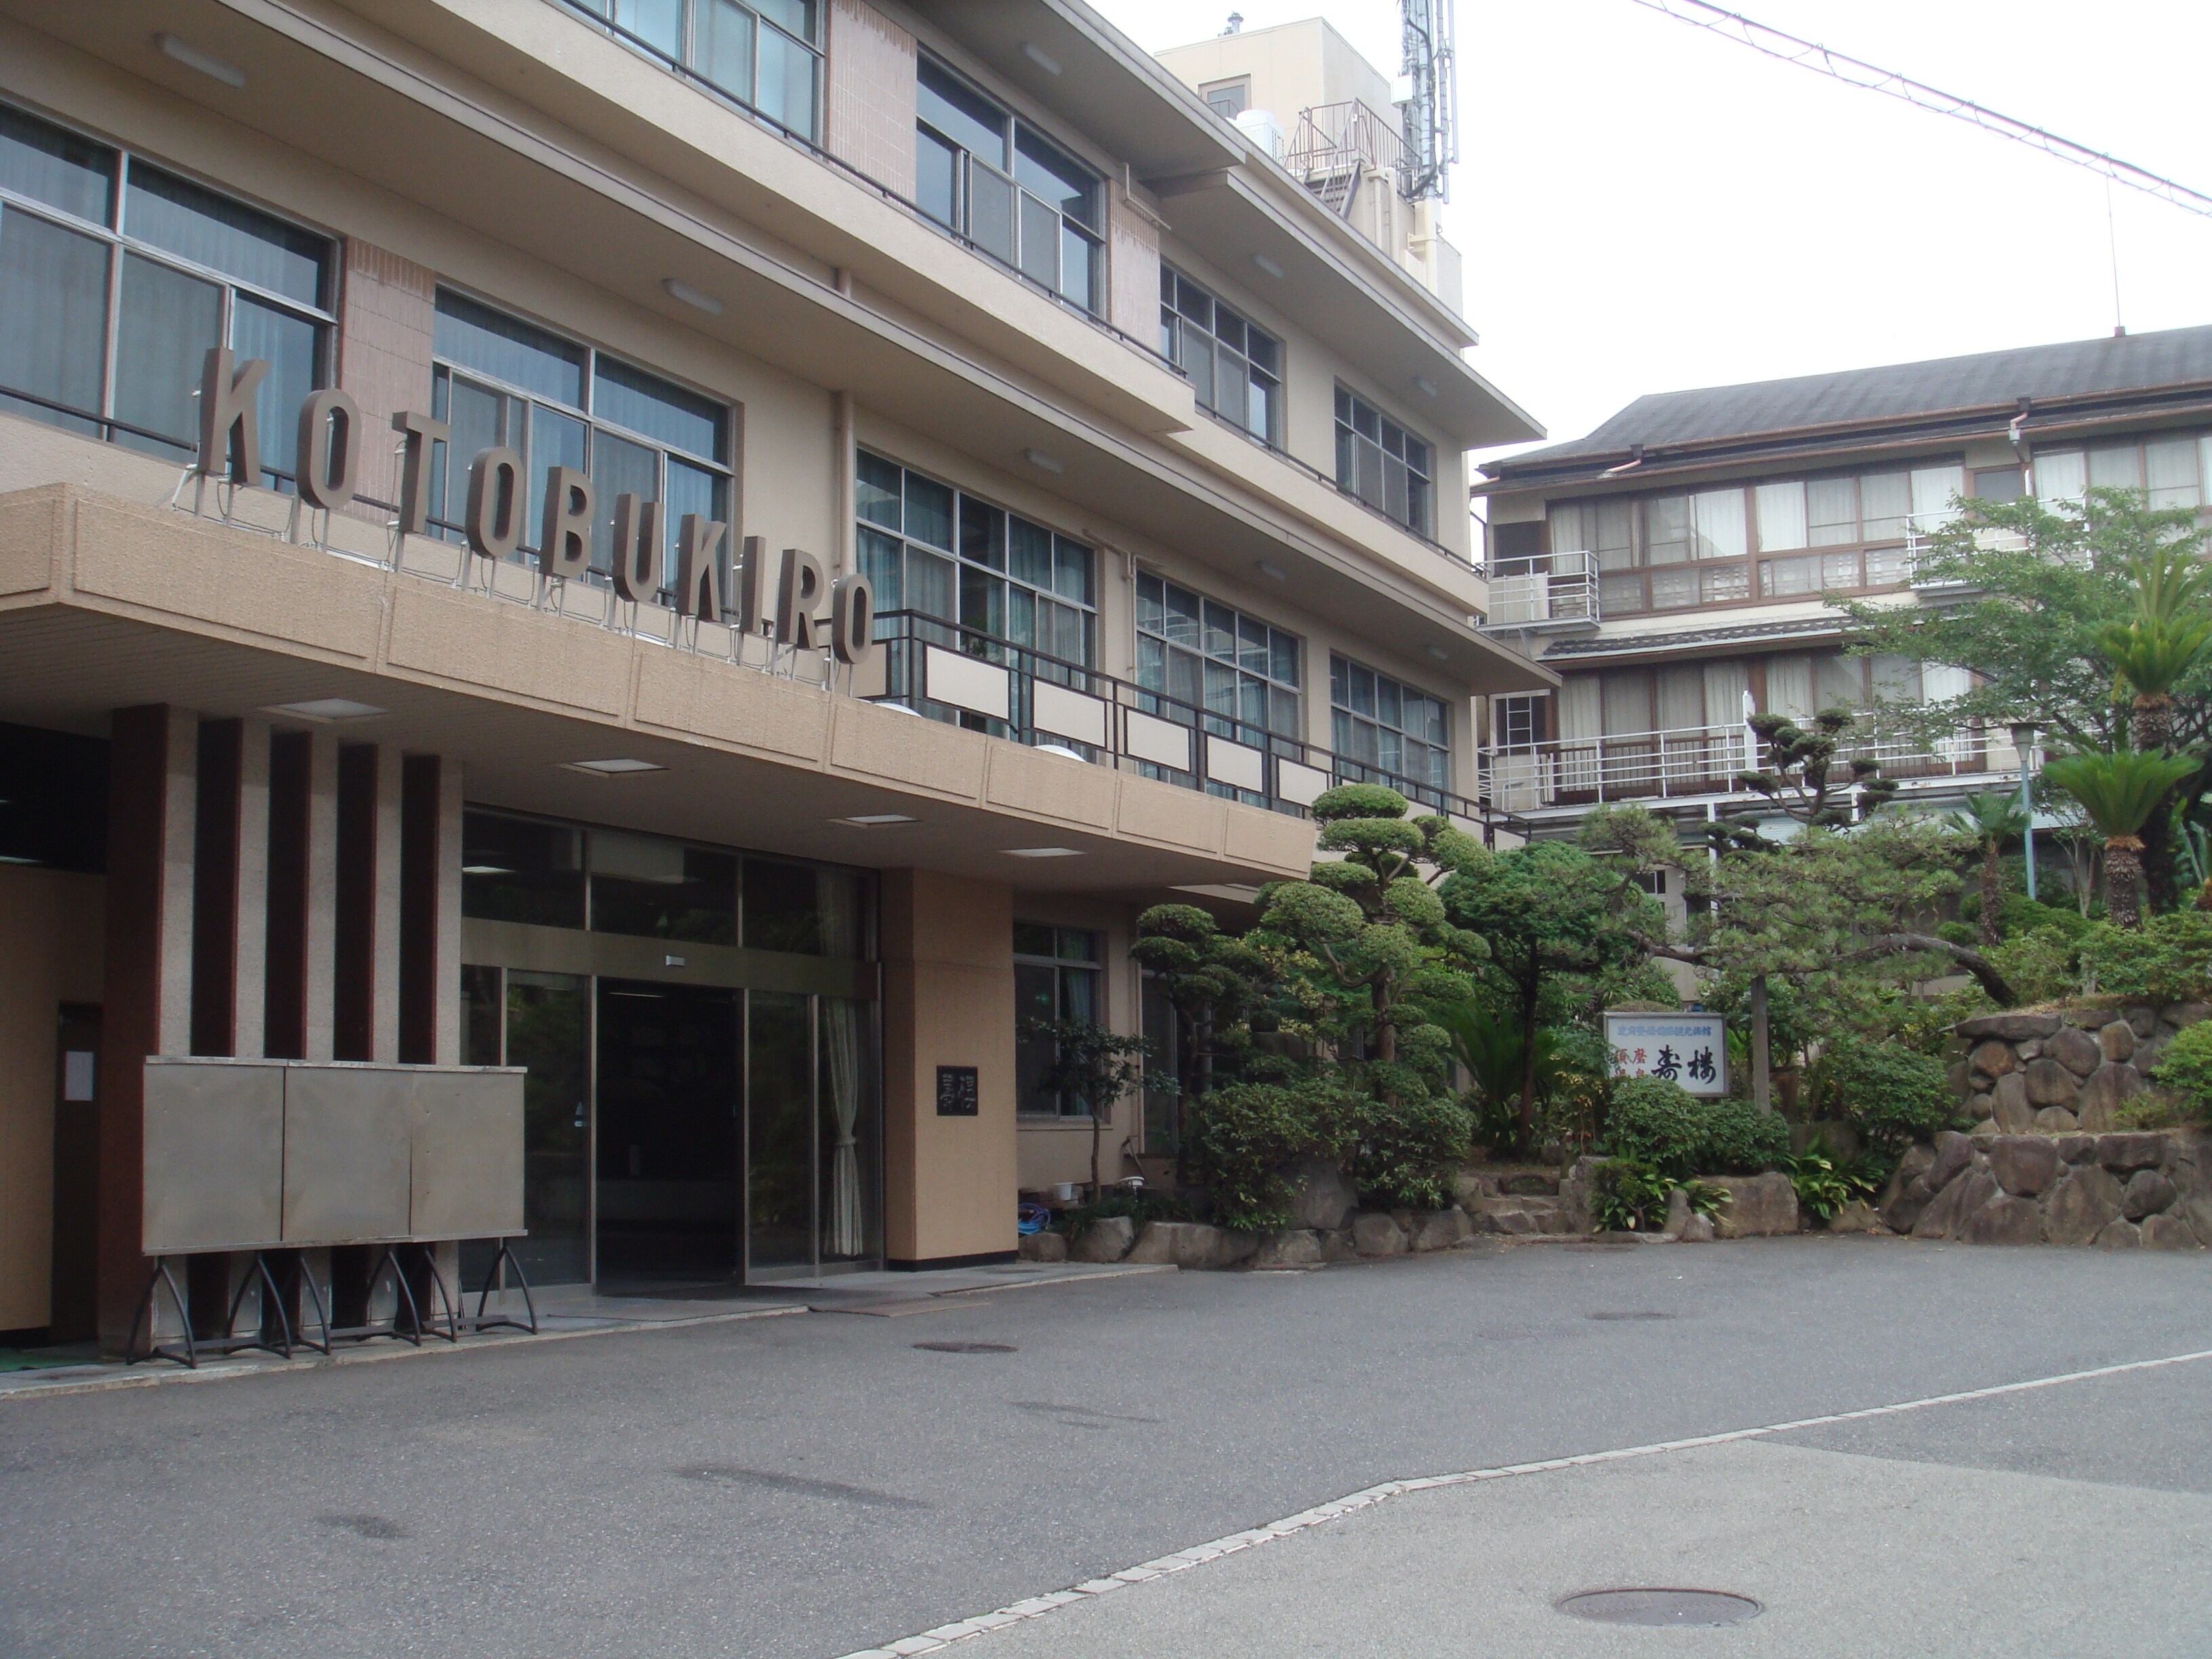 Exterior of Juro Main Building